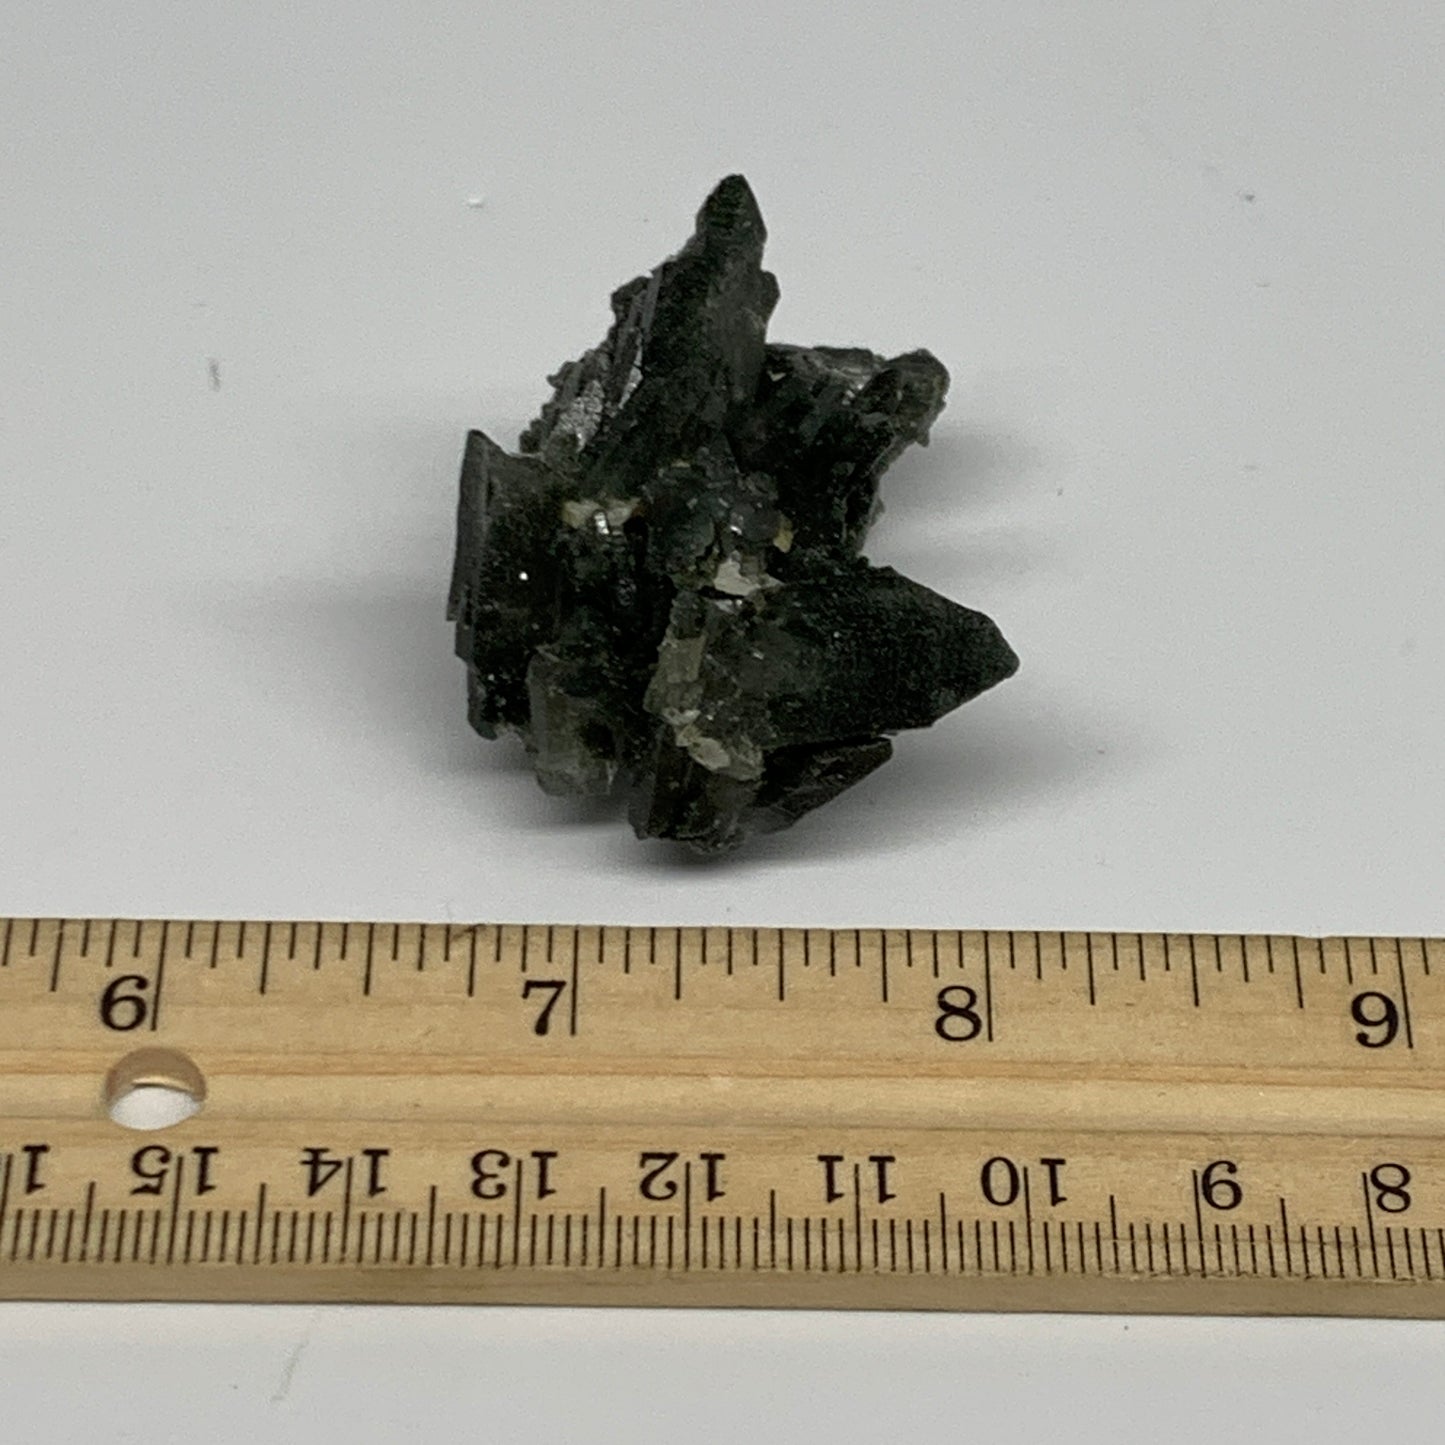 31.6g, 1.6"x1.1"x1.2", Chlorine Quartz Crystal Mineral,Specimen Terminated,B2773